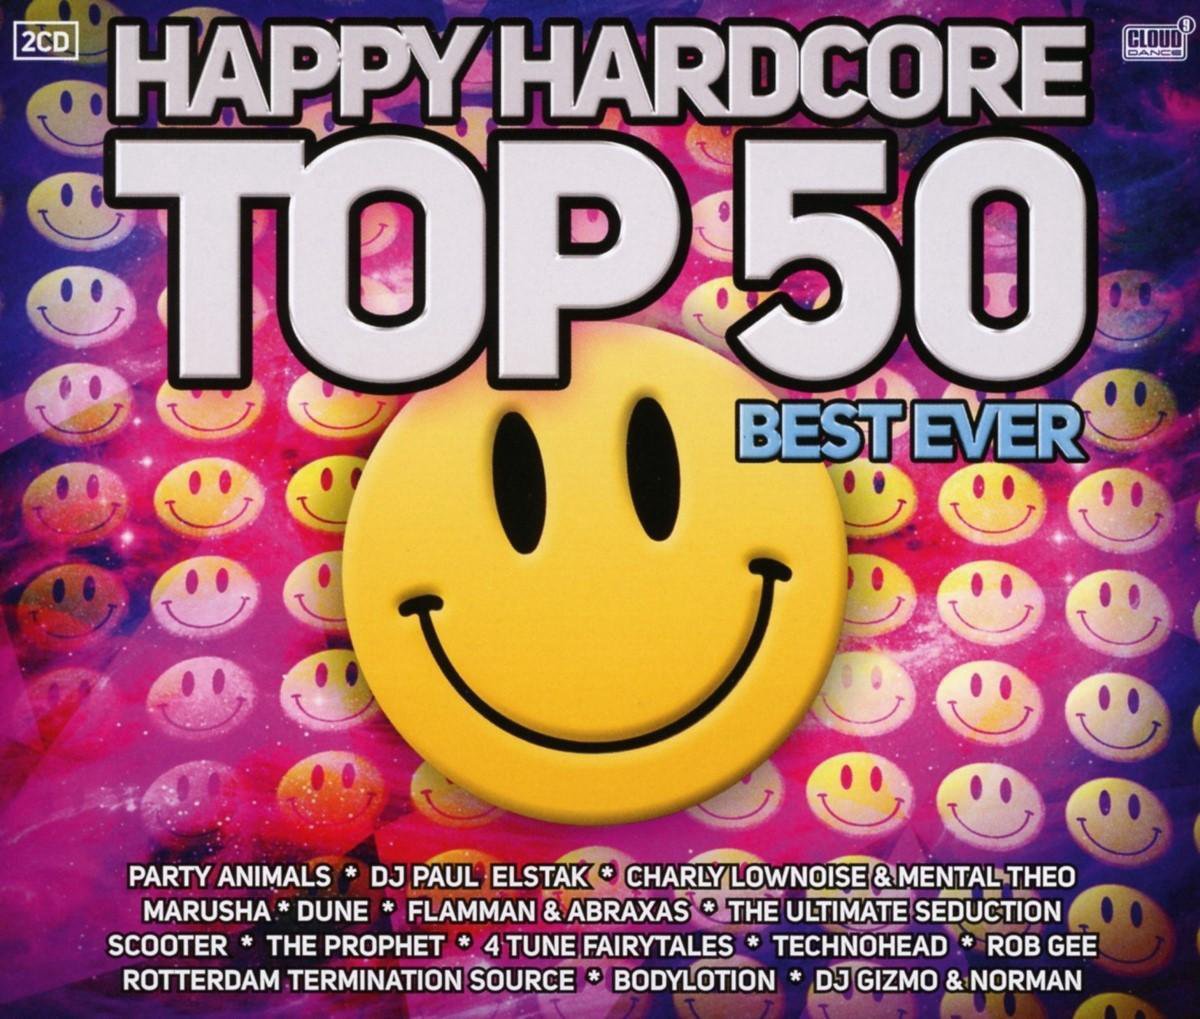 Happy Hardcore Top 50 - Best Ever (CD) - various artists